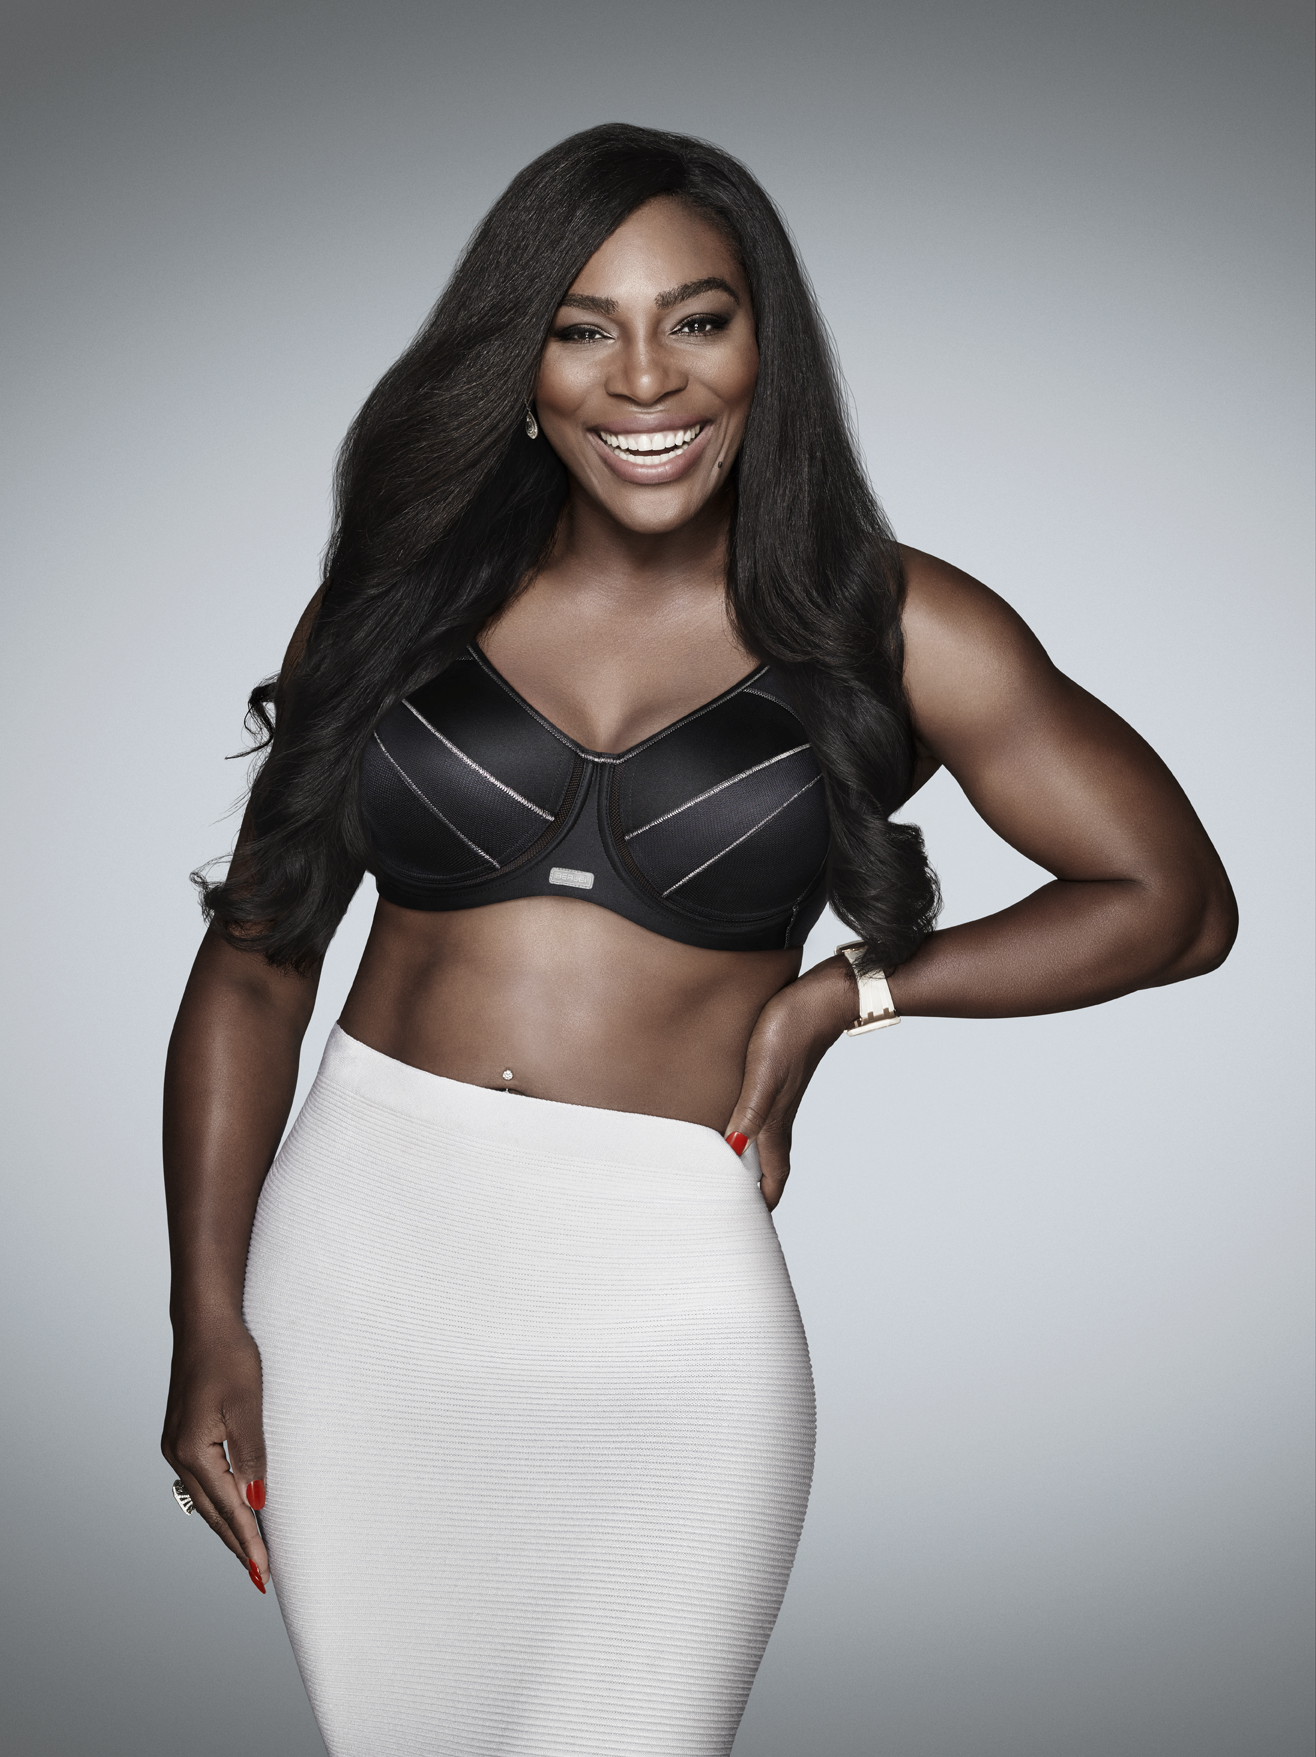 Serena Williams's Sports Bras Are Great for Big Boobs – SportsBra